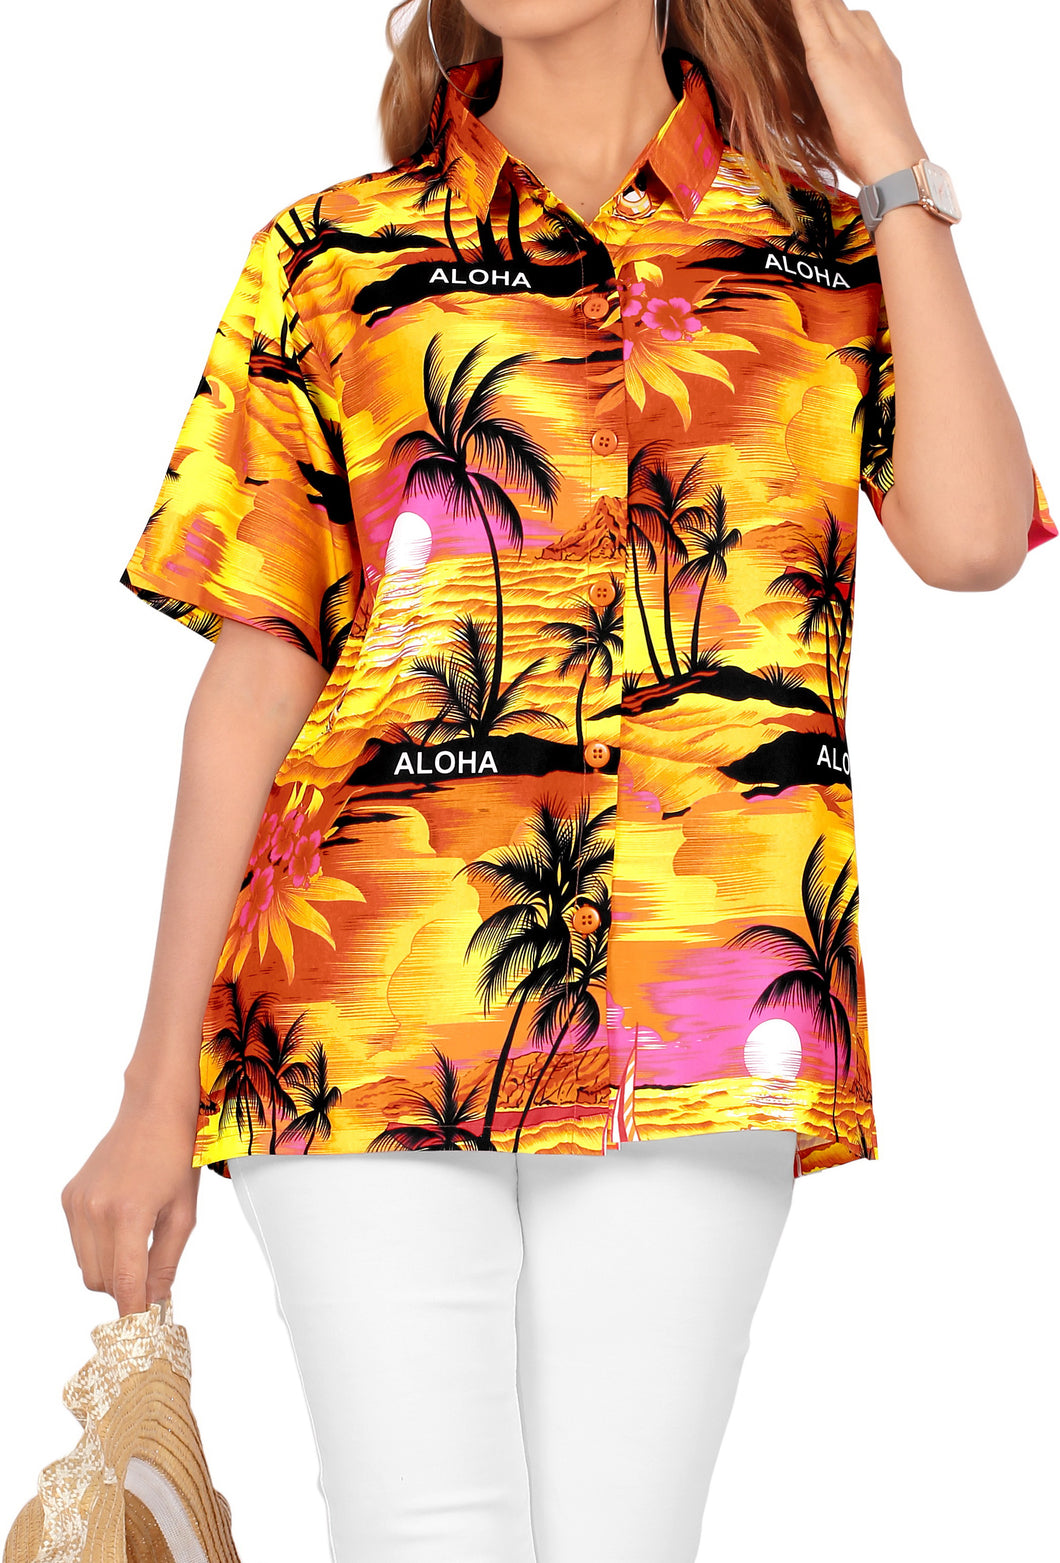 LA LEELA Women's Beach Casual Hawaiian Blouse Short Sleeve button Down Shirt Orange aloha